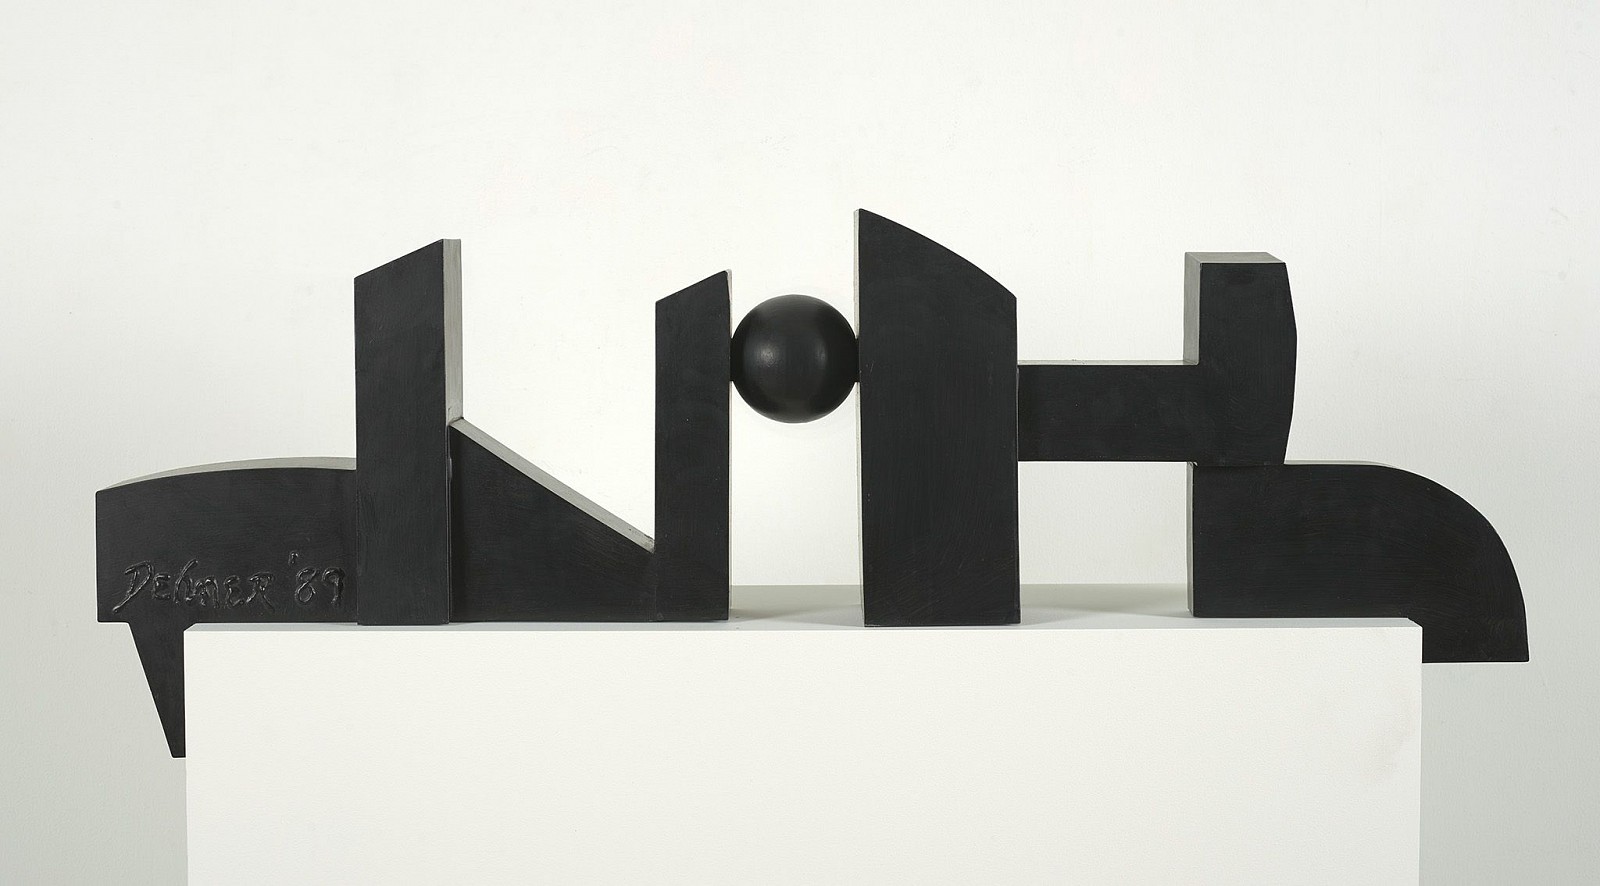 Dorothy Dehner, Balancing, 1989
Painted black steel, 49 1/2 x 17 x 6 in. (125.7 x 43.2 x 15.2 cm)
DEH-00001